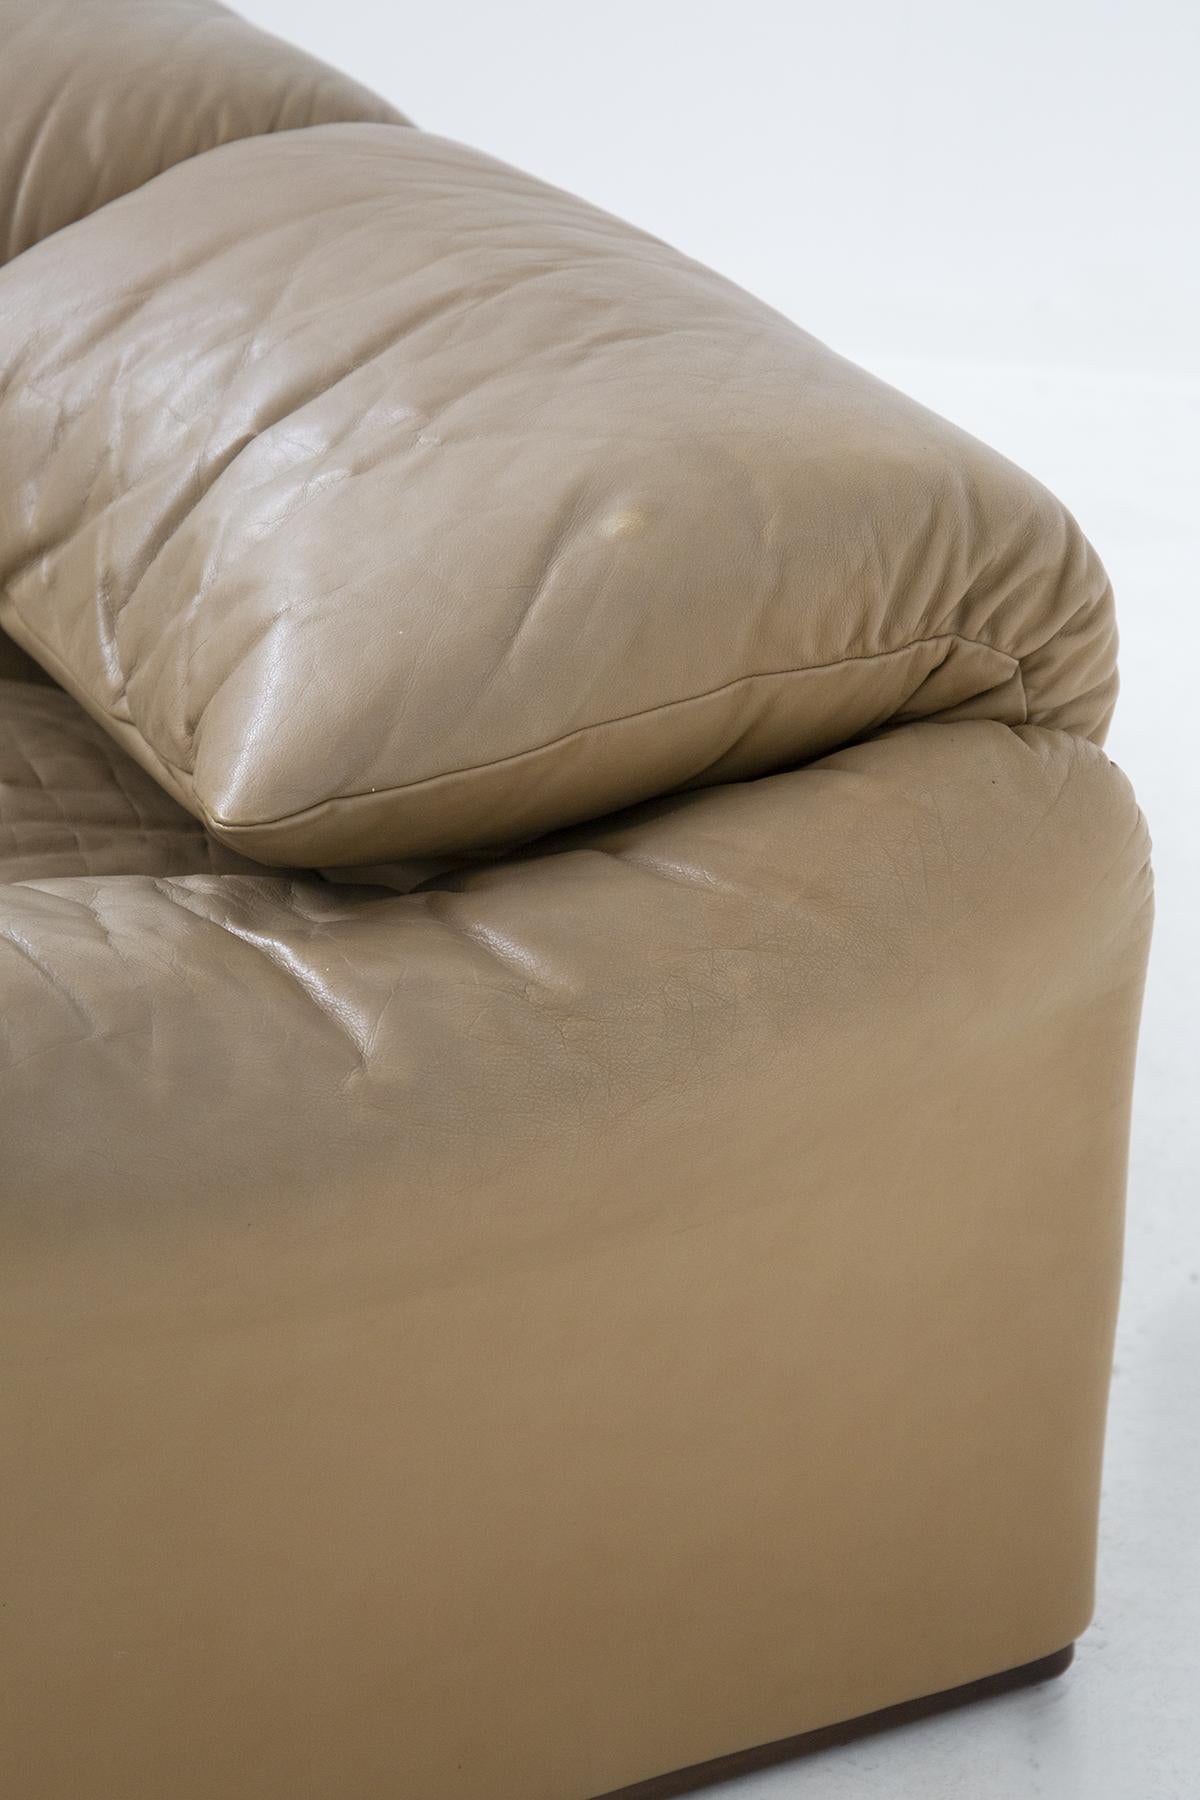 Maralunga Vintage Leather Sofa by Vico Magistretti for Cassina 3